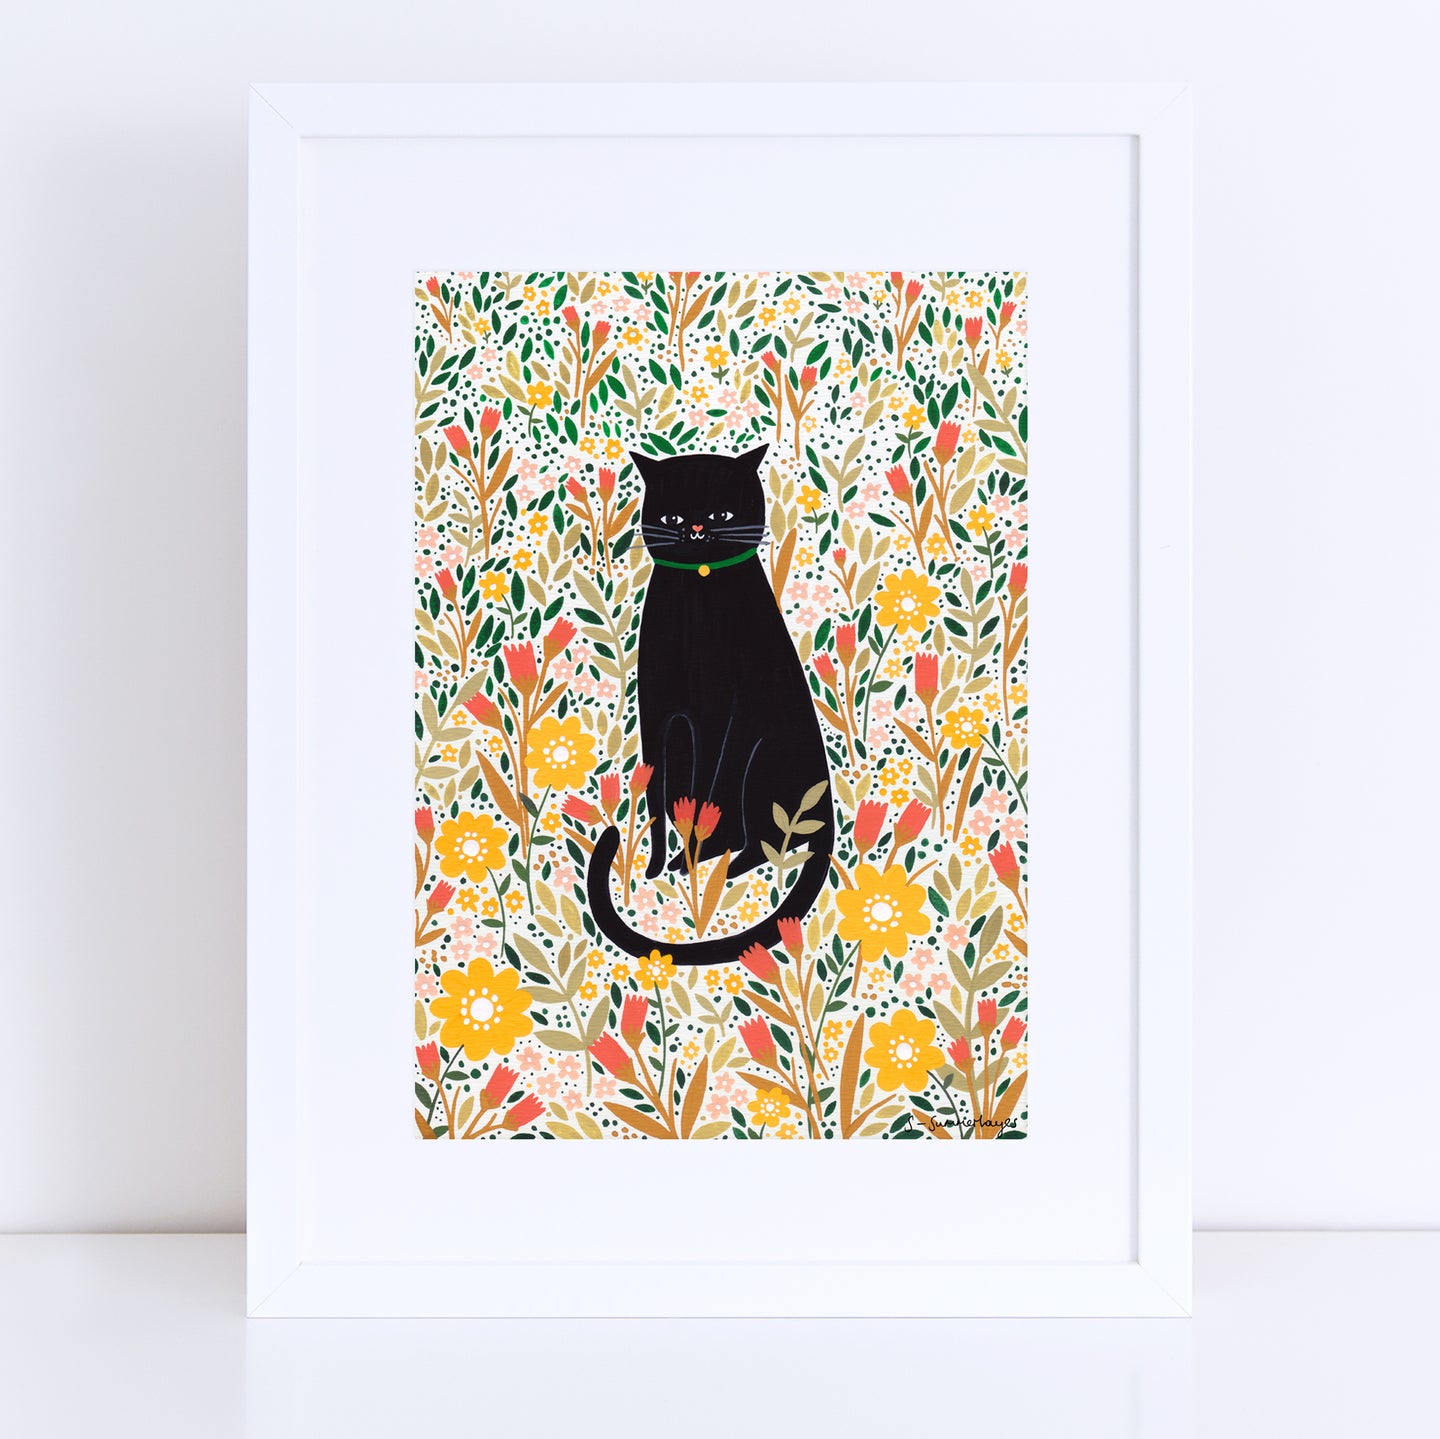 Cat Meadow Art Print